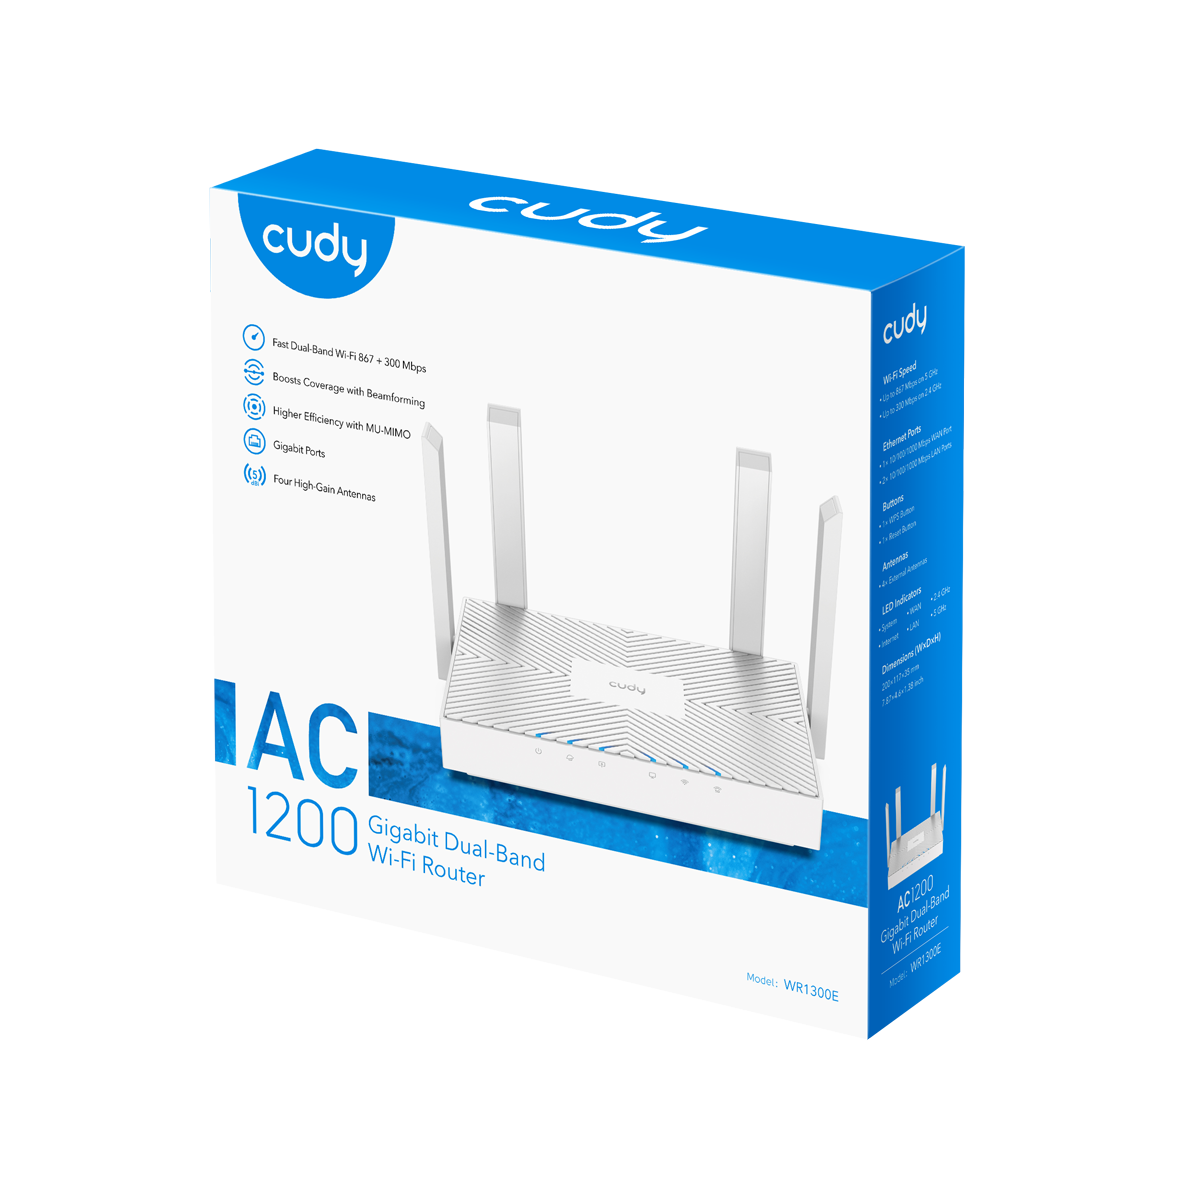 AC1200 Gigabit Mesh Wi-Fi Router, WR1300E 2.0